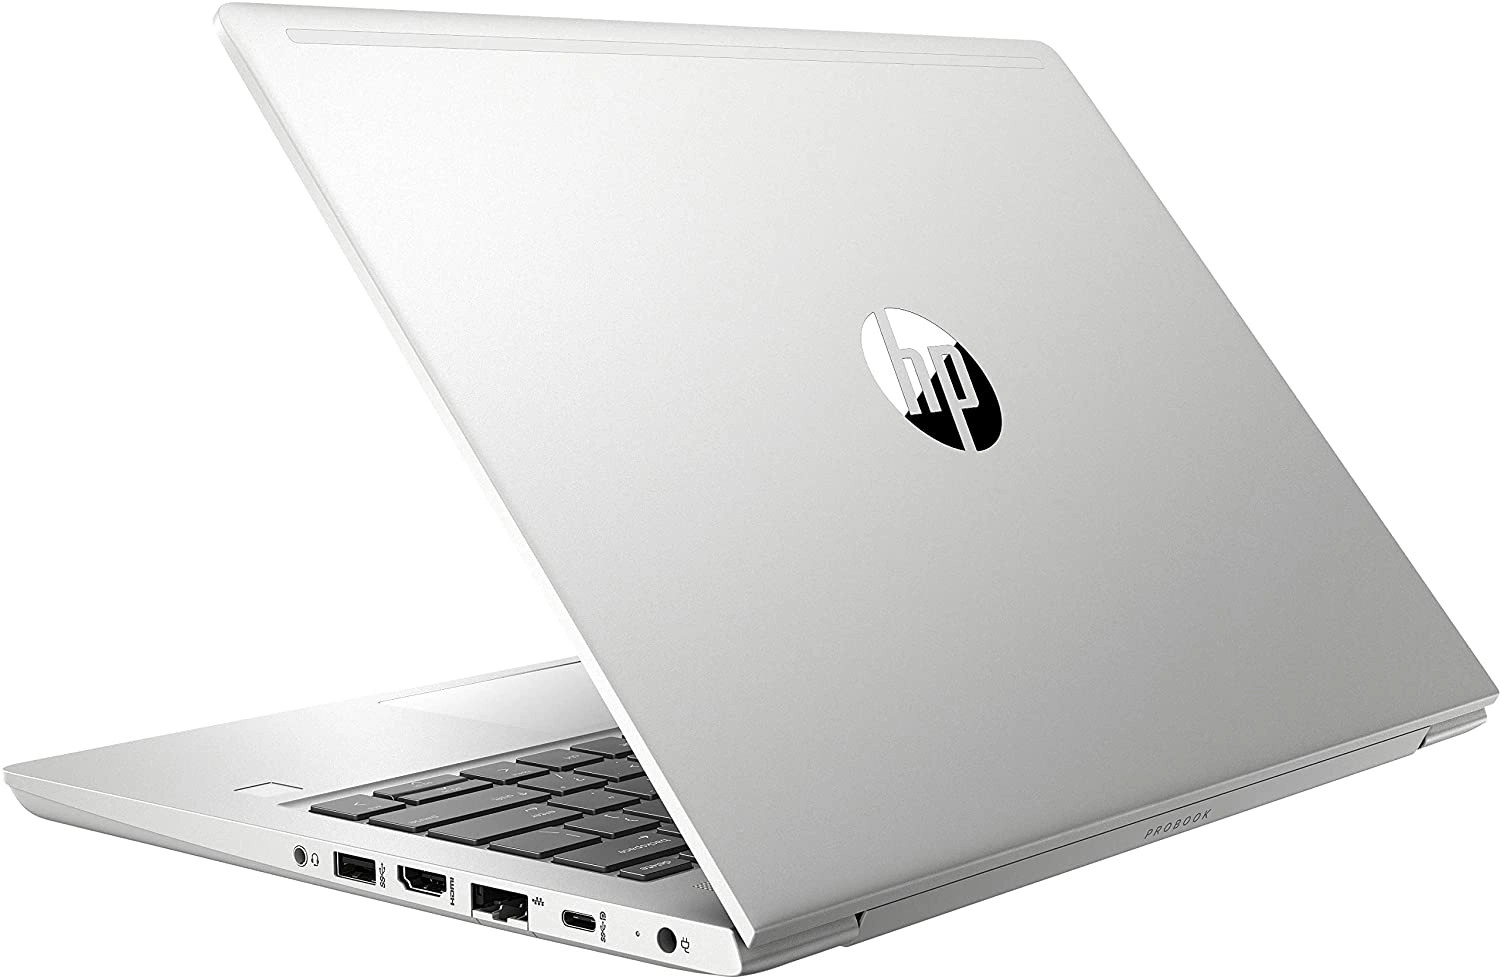 HP ProBook 430 G7 laptop image